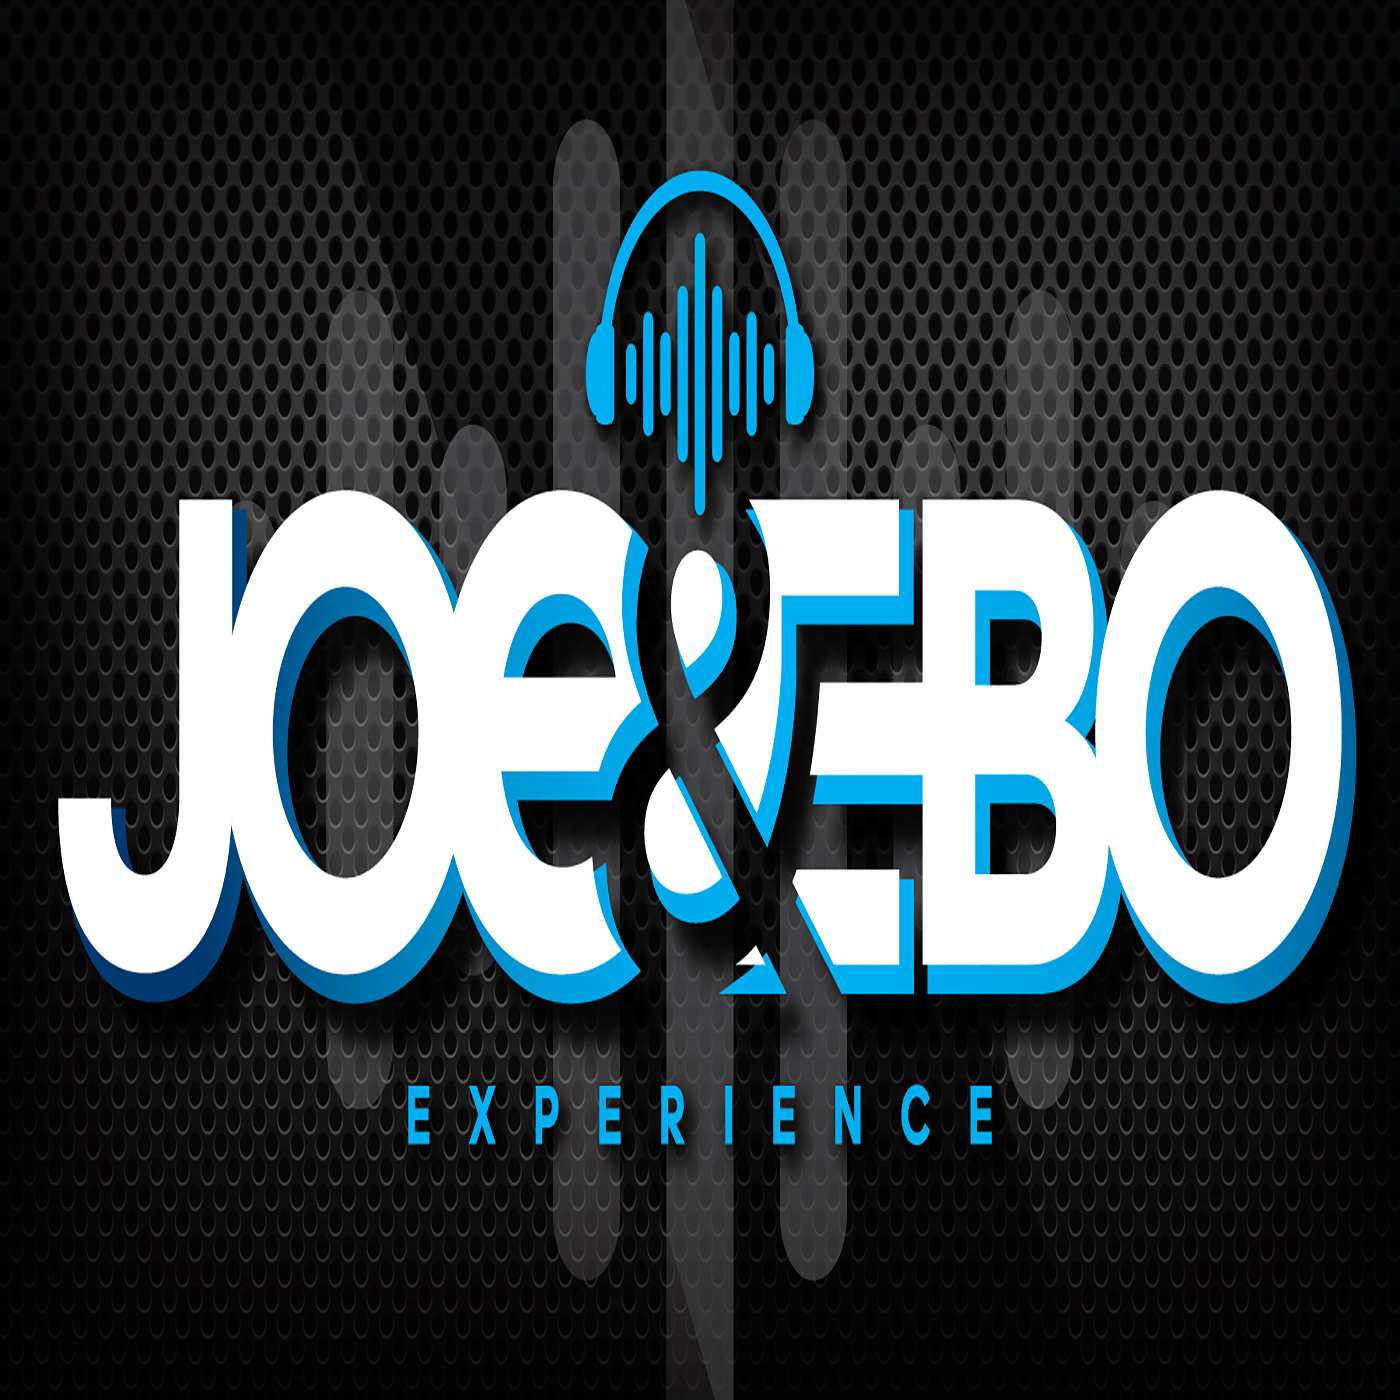 Joe & Ebo Experience: Tough Decisions